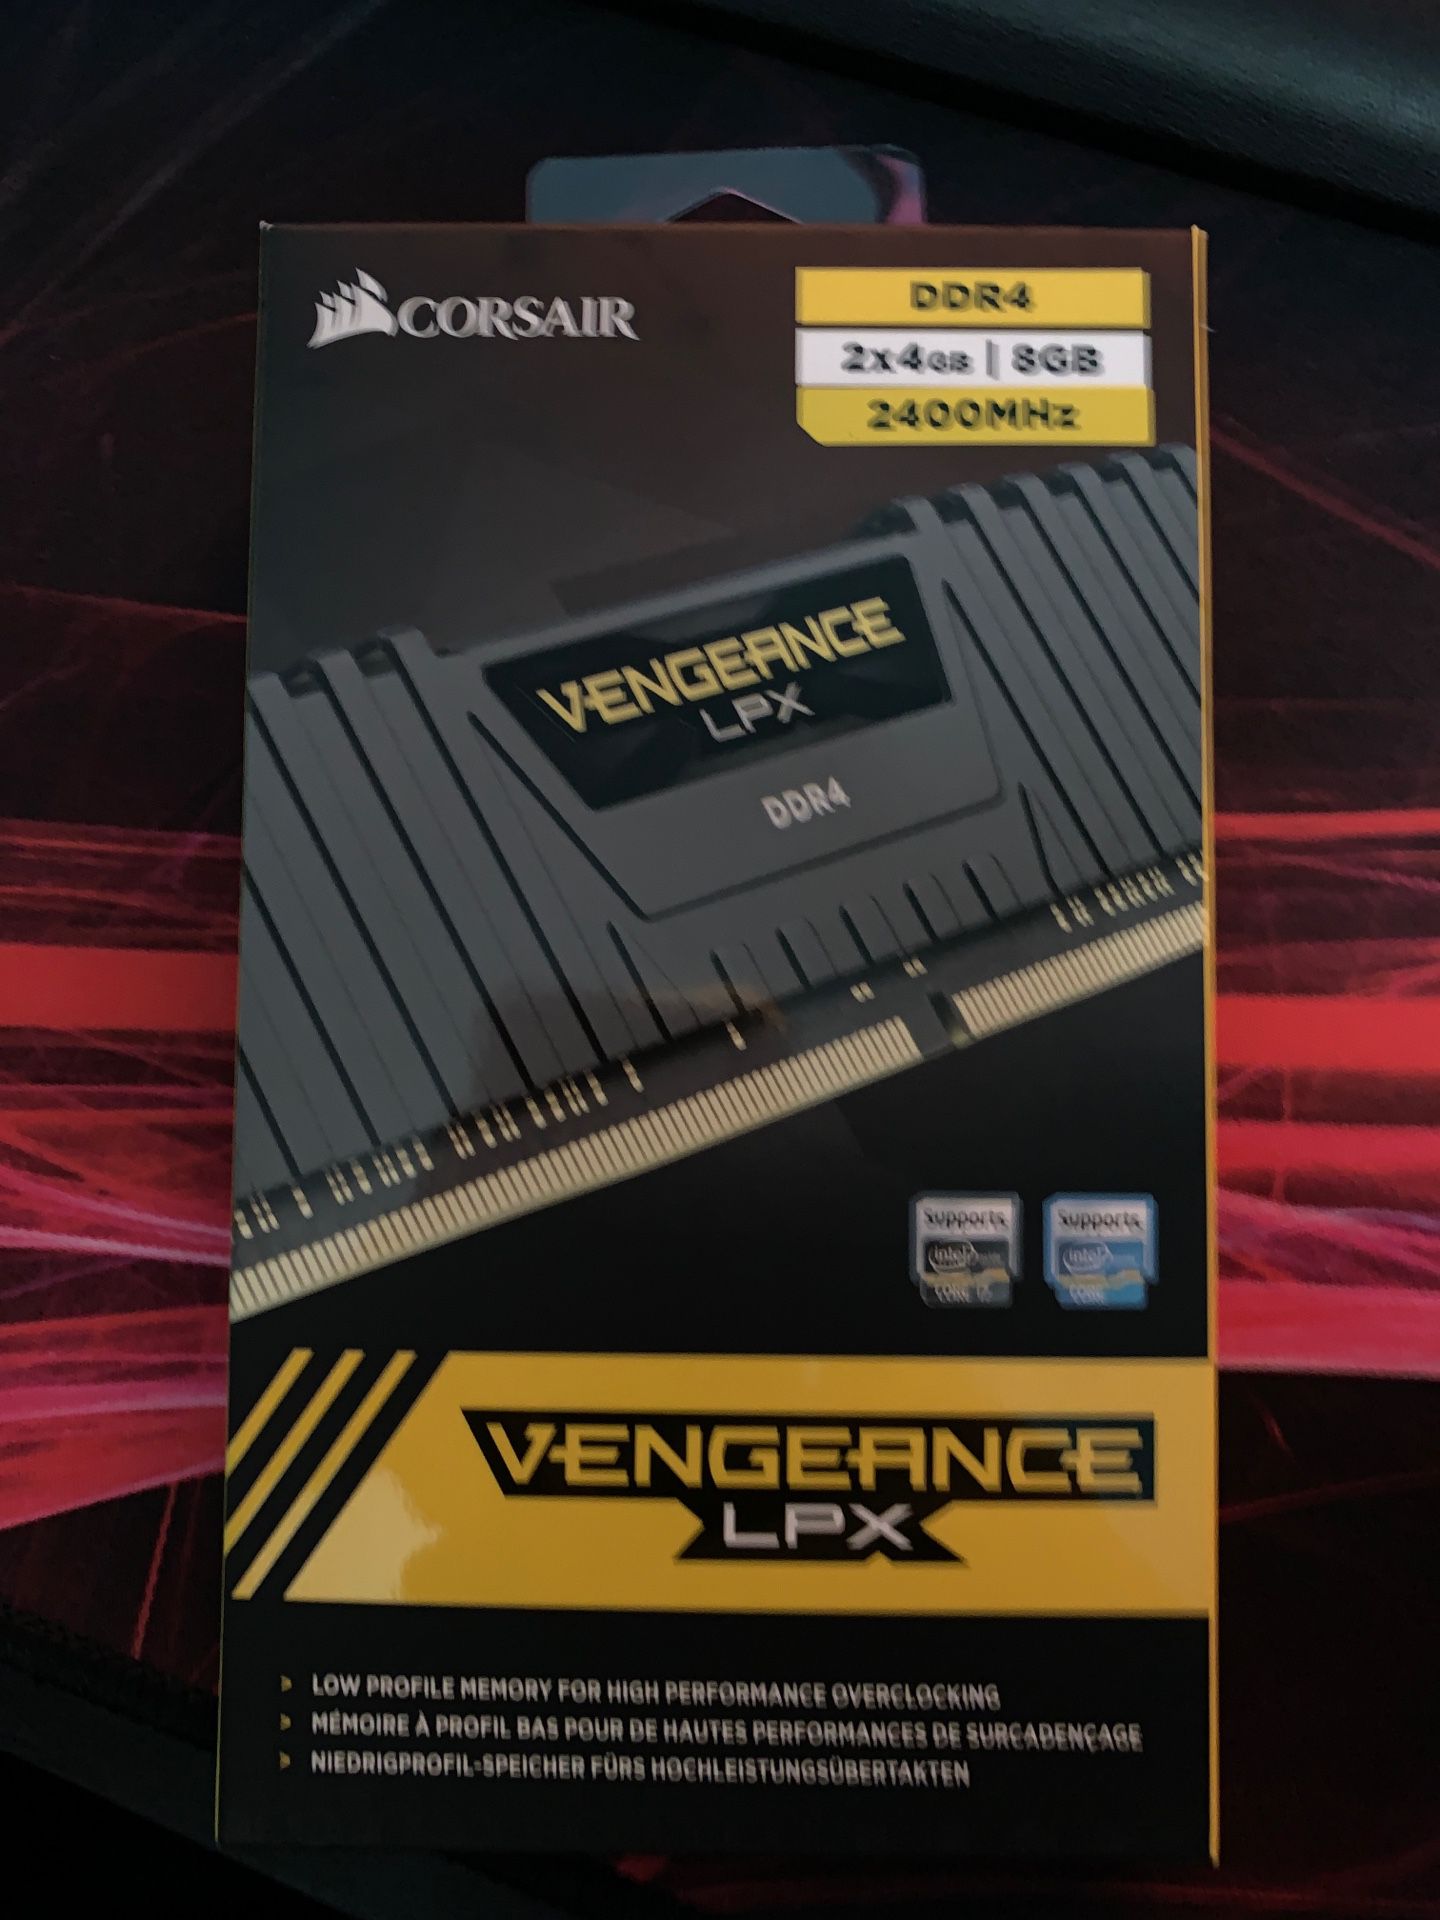 Corsair vengeance LPX (2x4gb) 288pin DDR4 2400